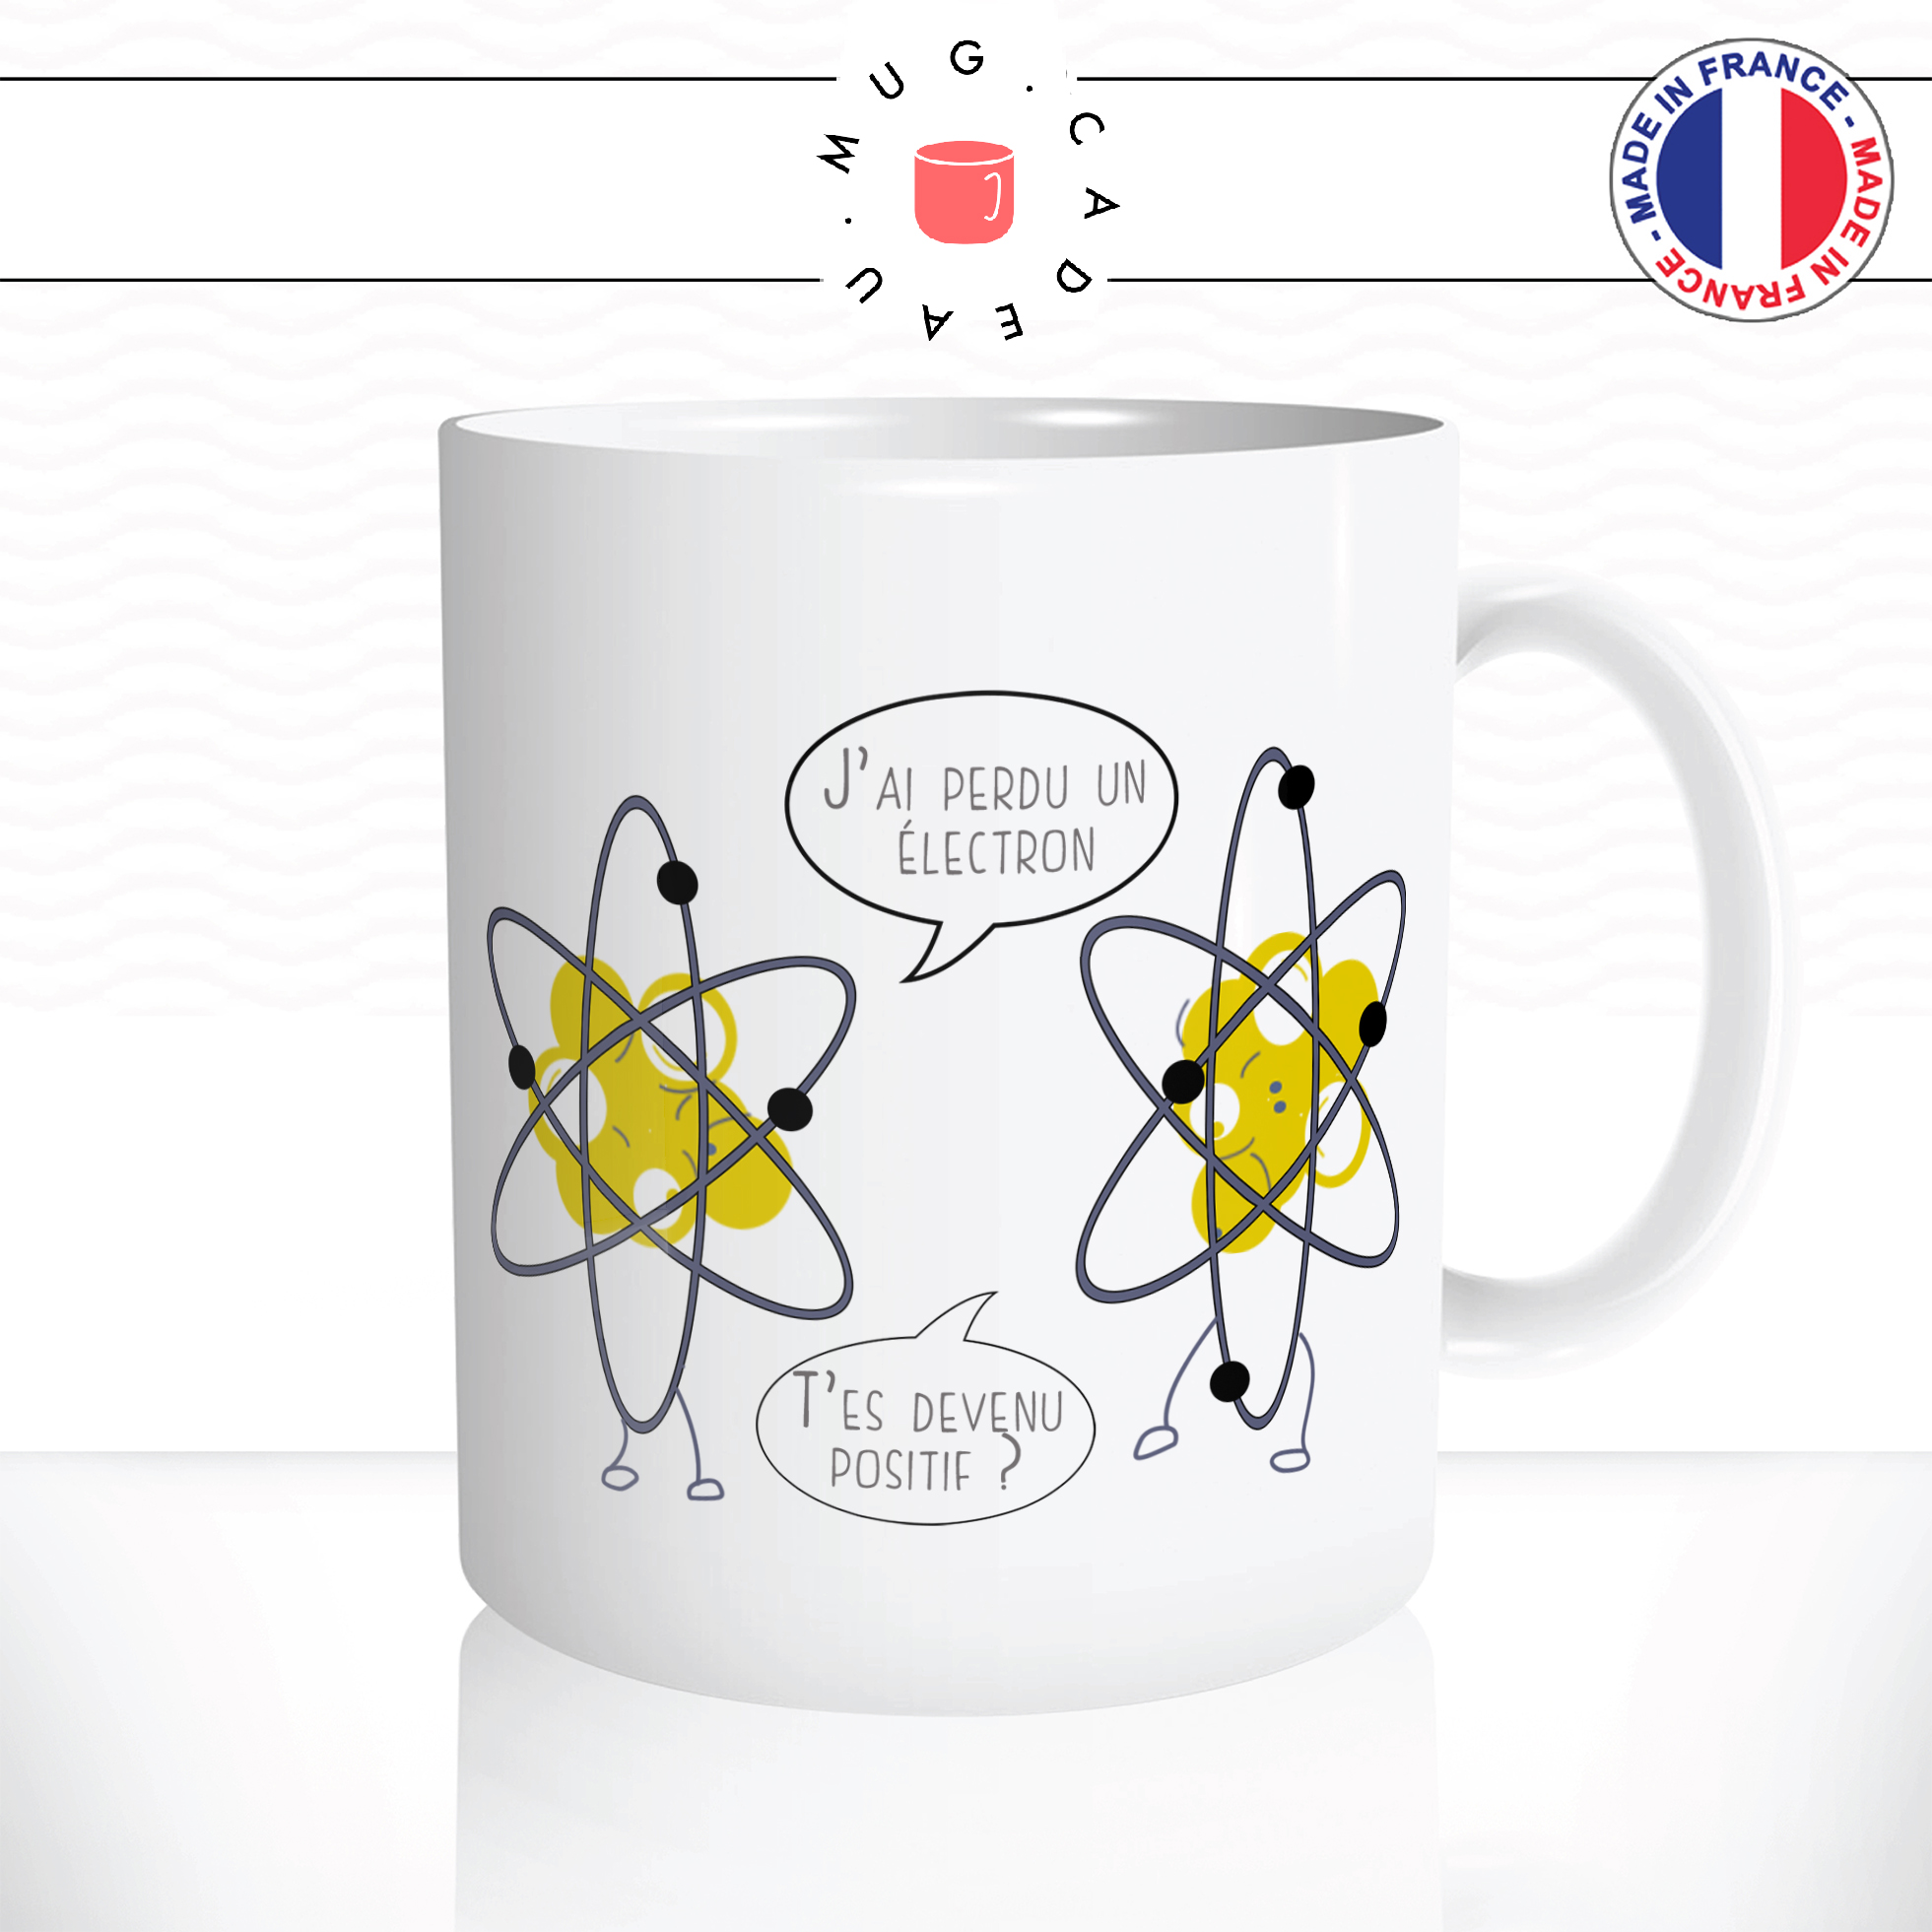 mug-tasse-ref12-geek-electrons-positif-humour-cafe-the-mugs-tasses-personnalise-anse-droite